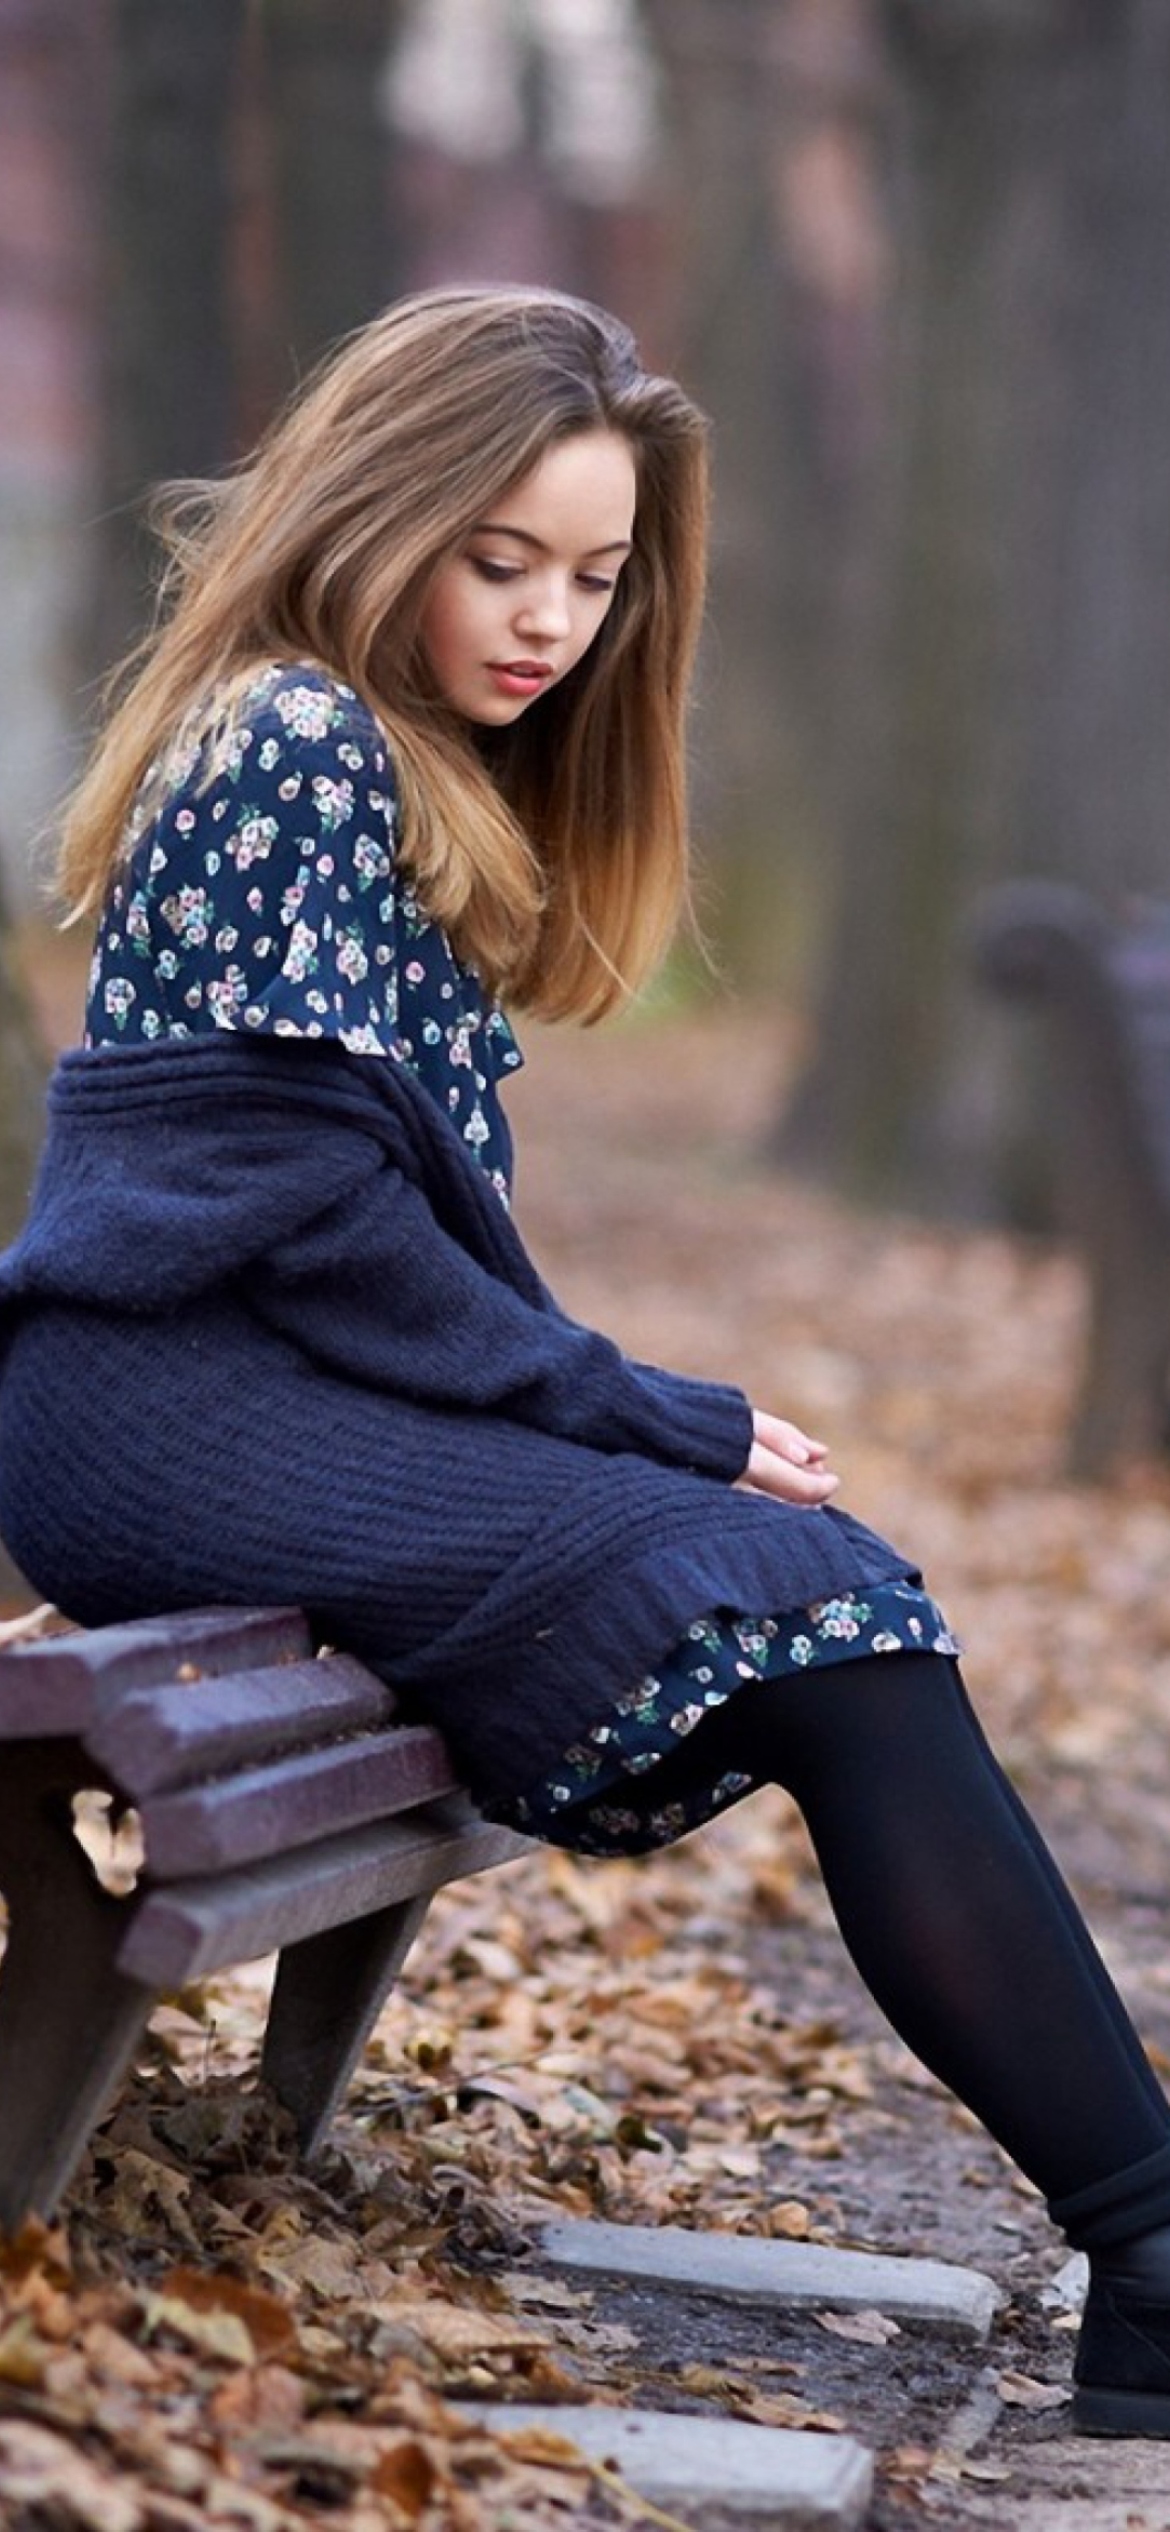 Sfondi Beautiful Girl Sitting On Bench In Autumn Park 1170x2532